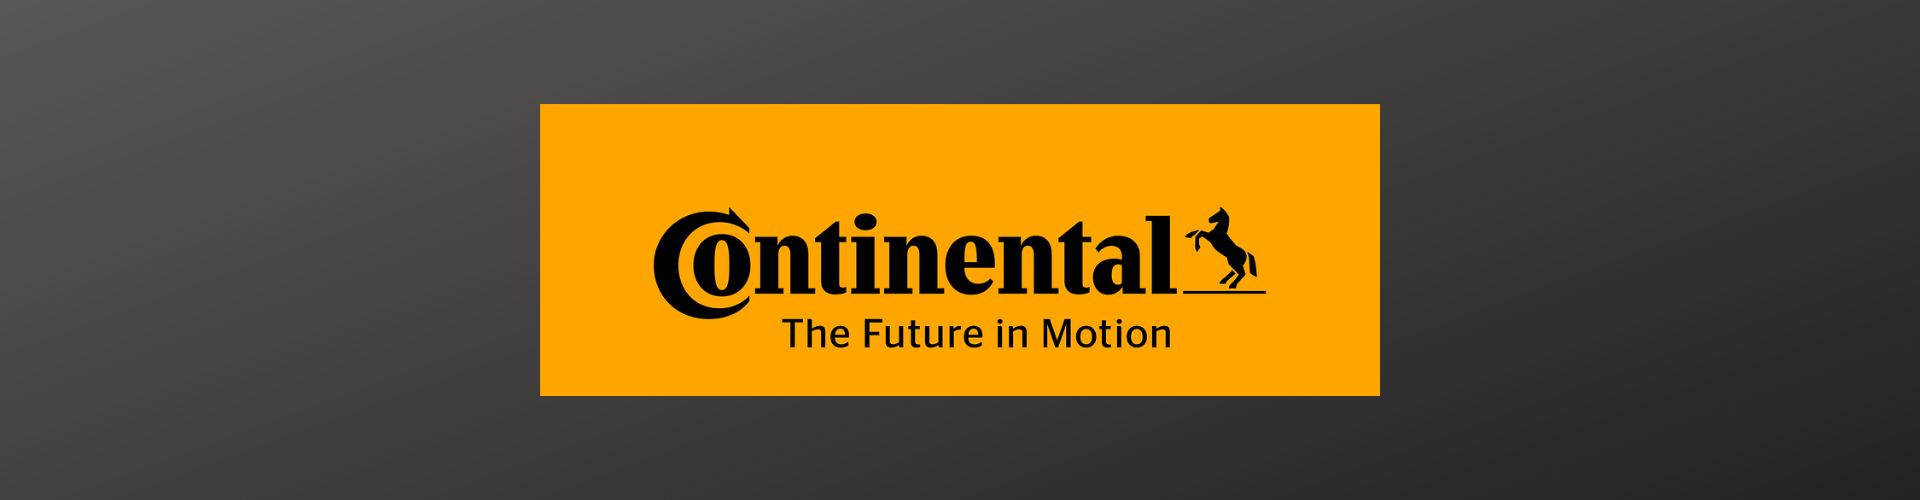 banner continental logo